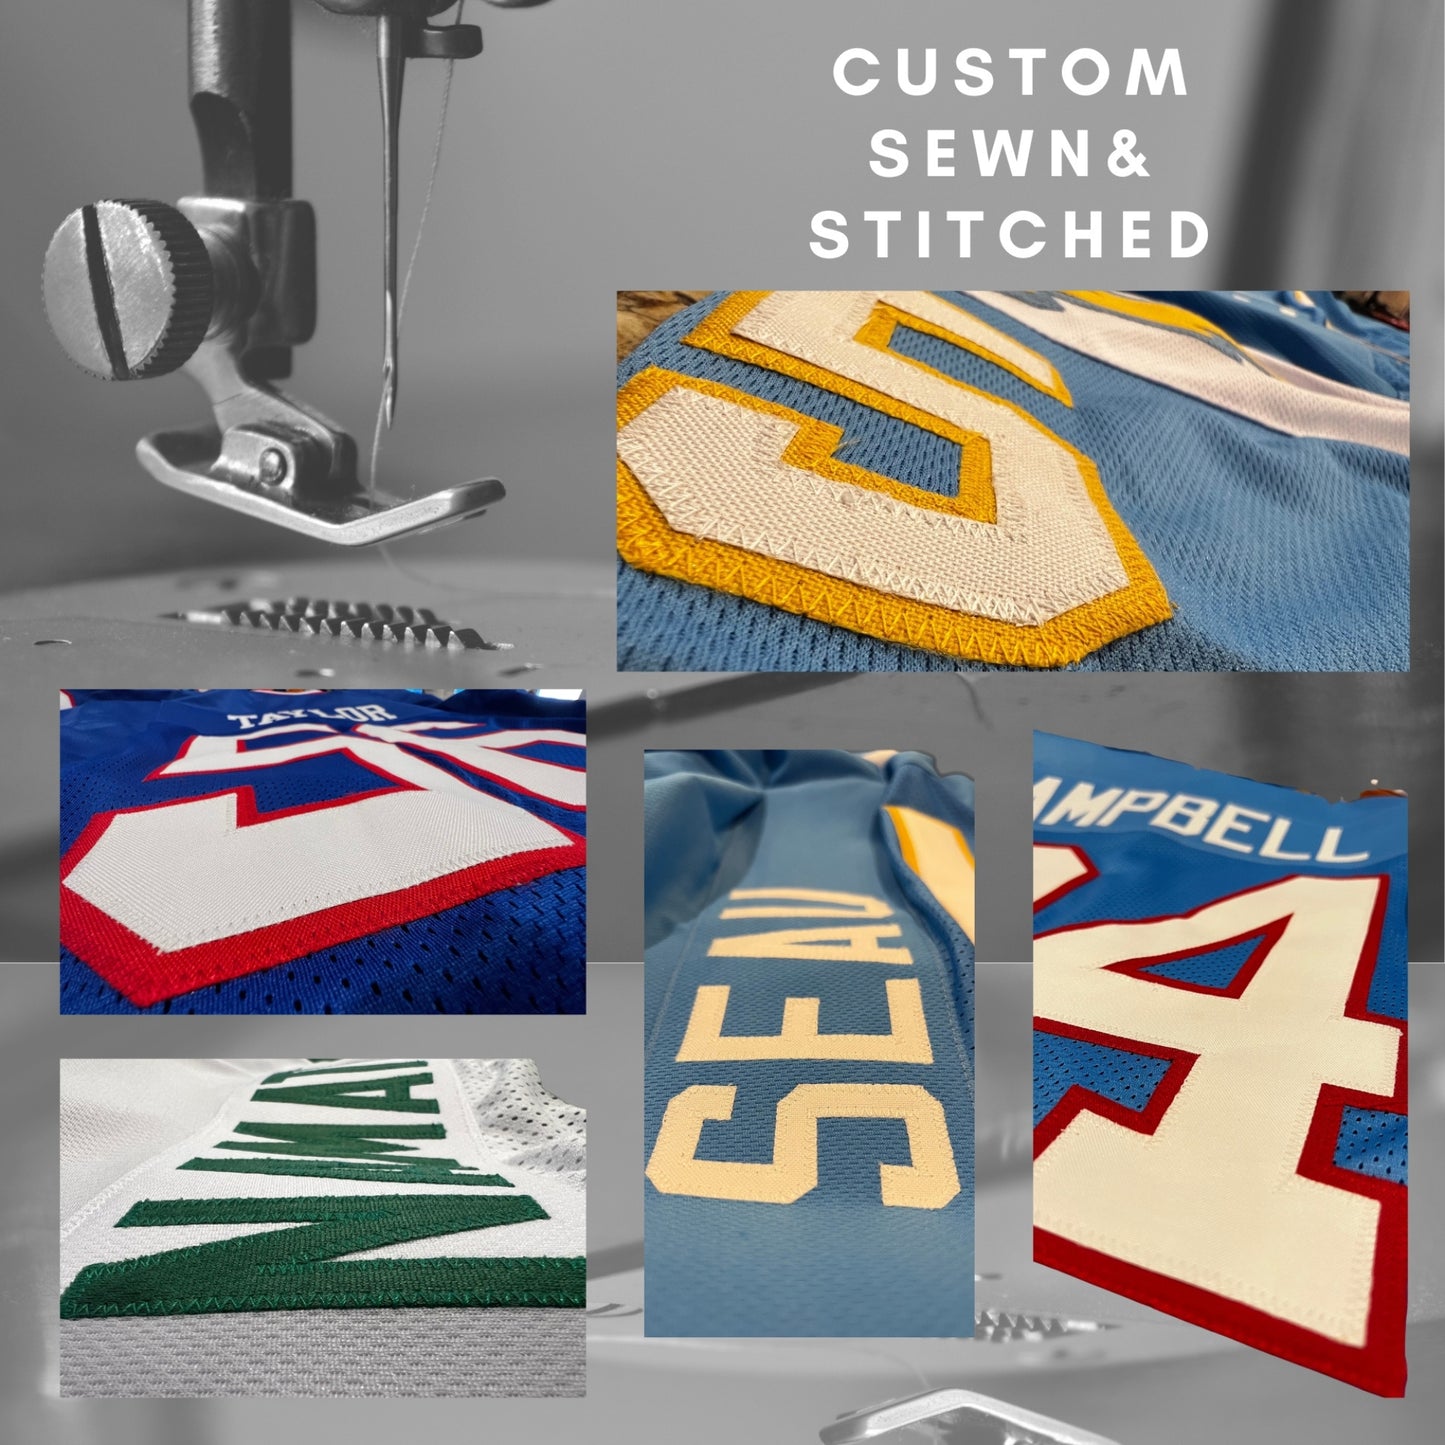 Rob Gronkowski Jersey Red Tampa Bay | S-5XL Custom Sewn Stitched